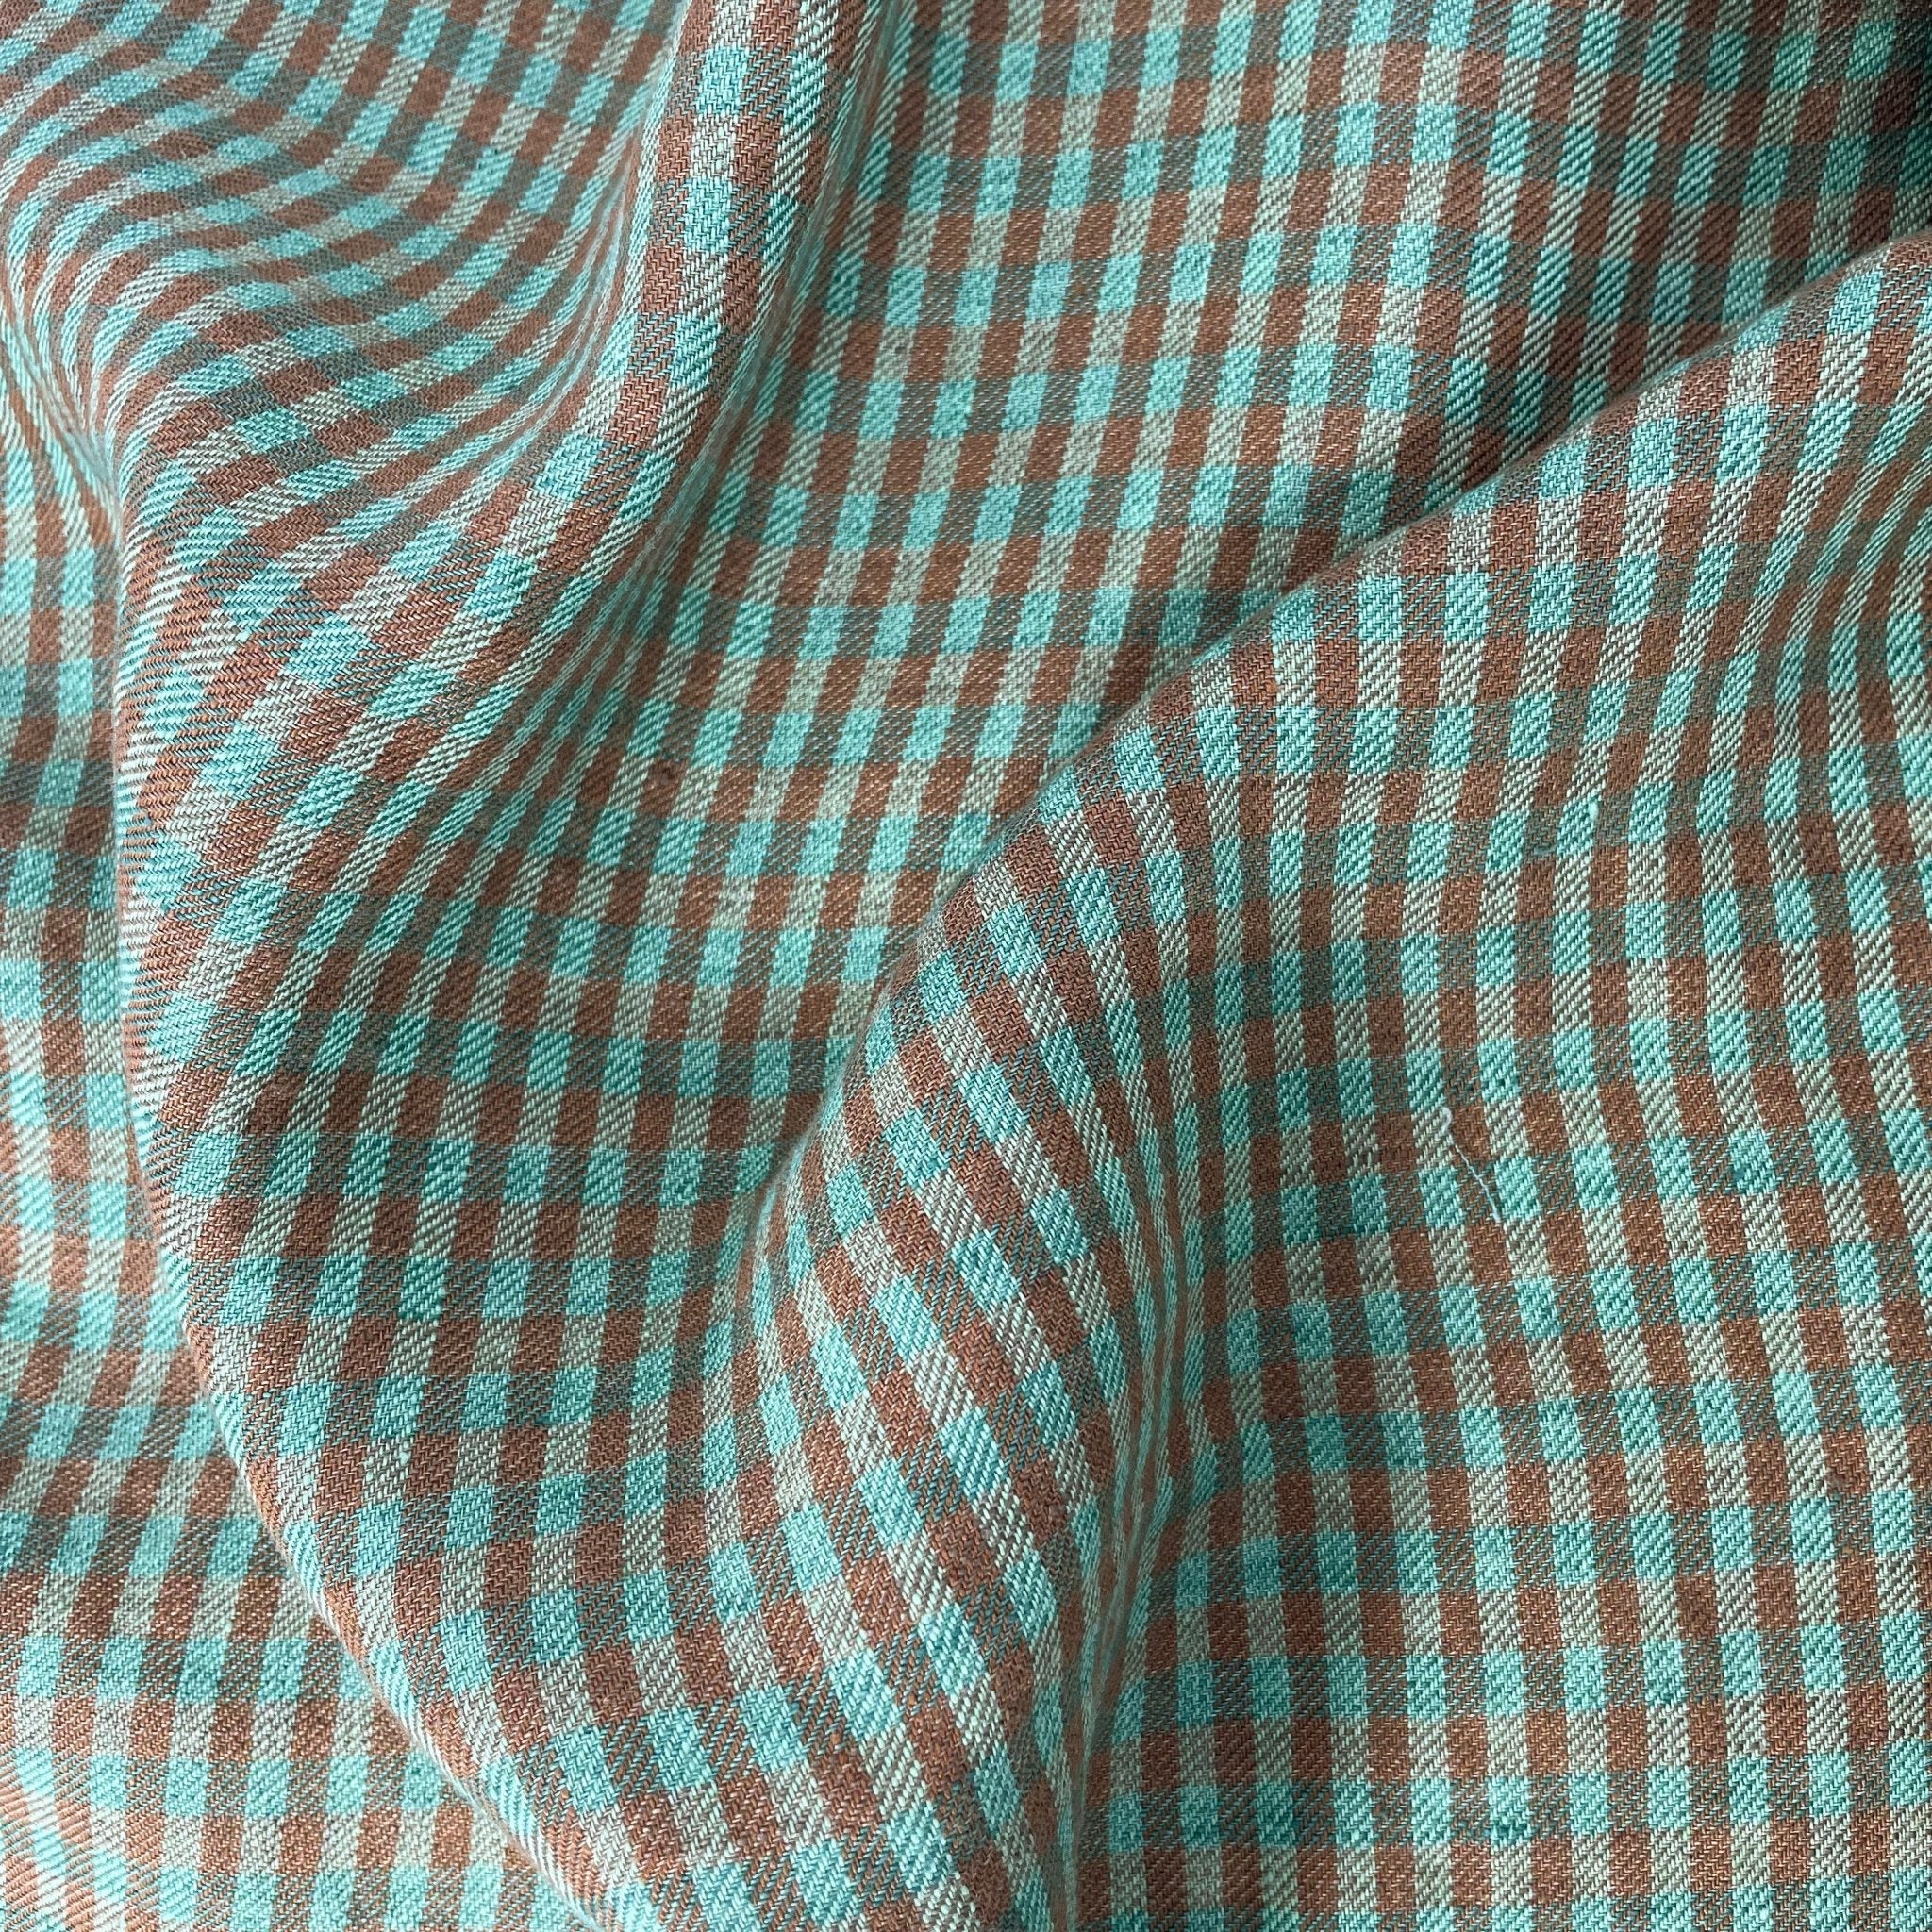 Linen Small Green Check Fabric 7568 7569 - The Linen Lab - D/green 7569